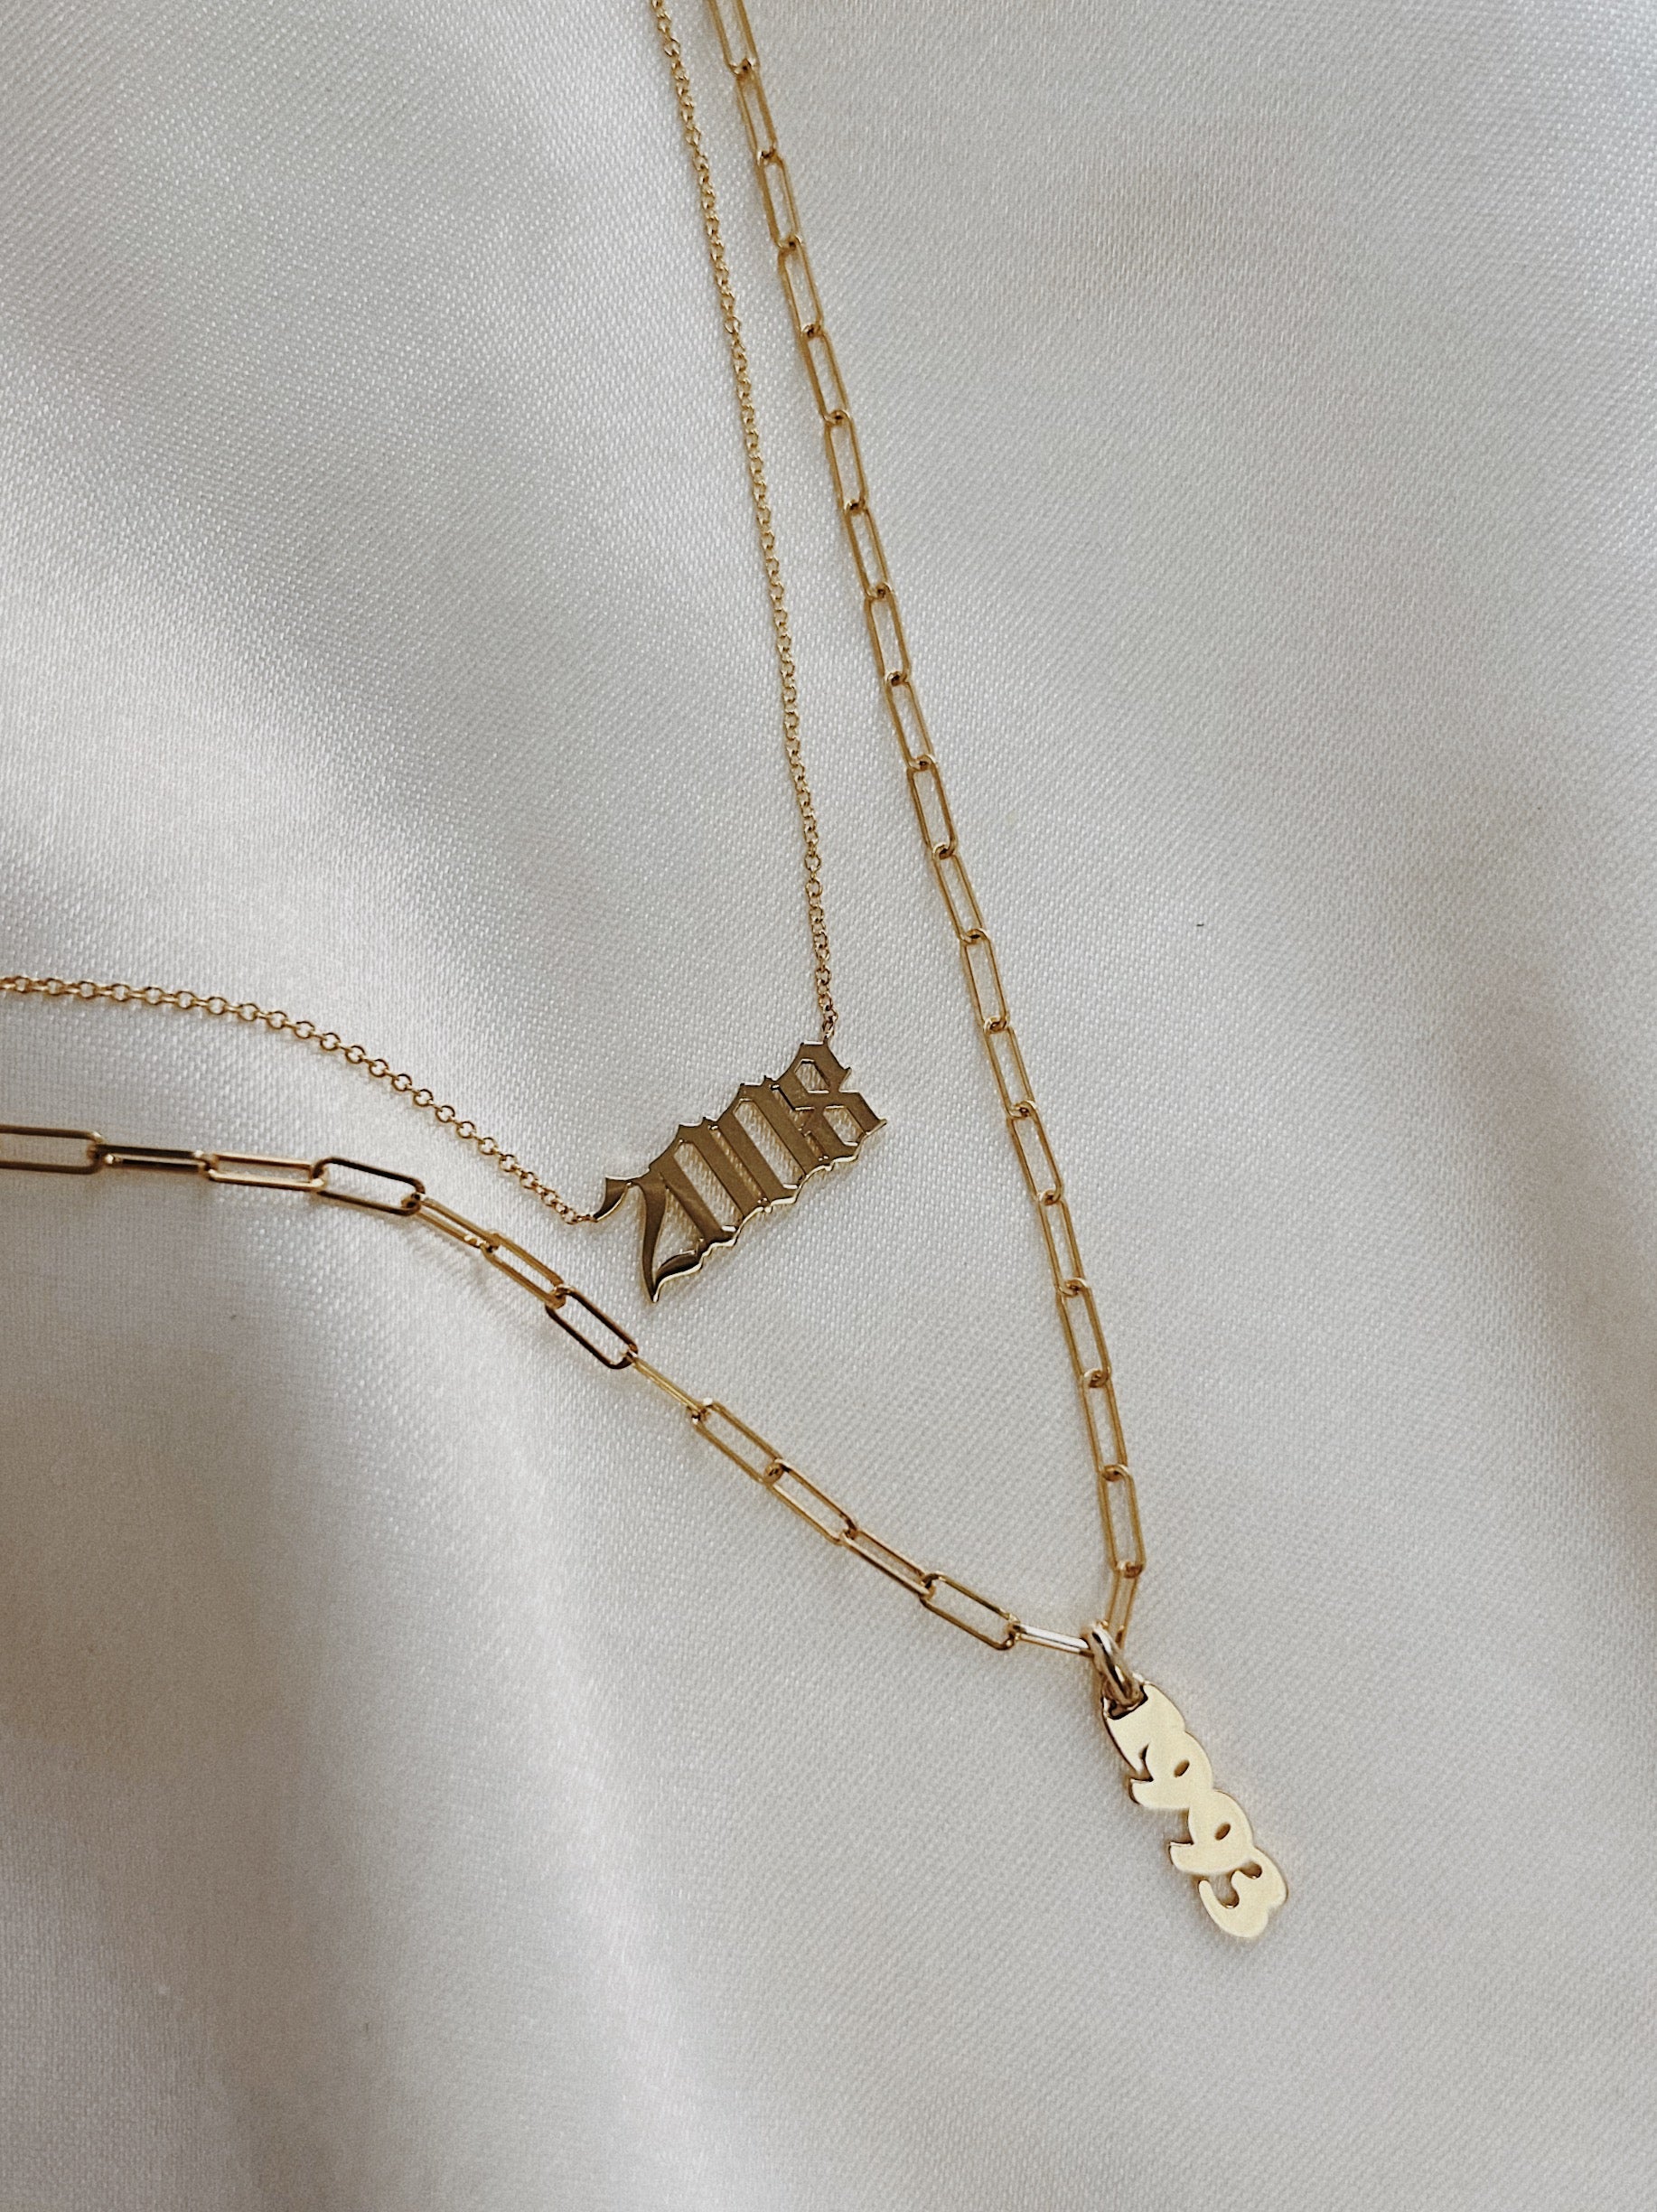 Zoe Lev Jewelry - 14k Gold Date Necklace